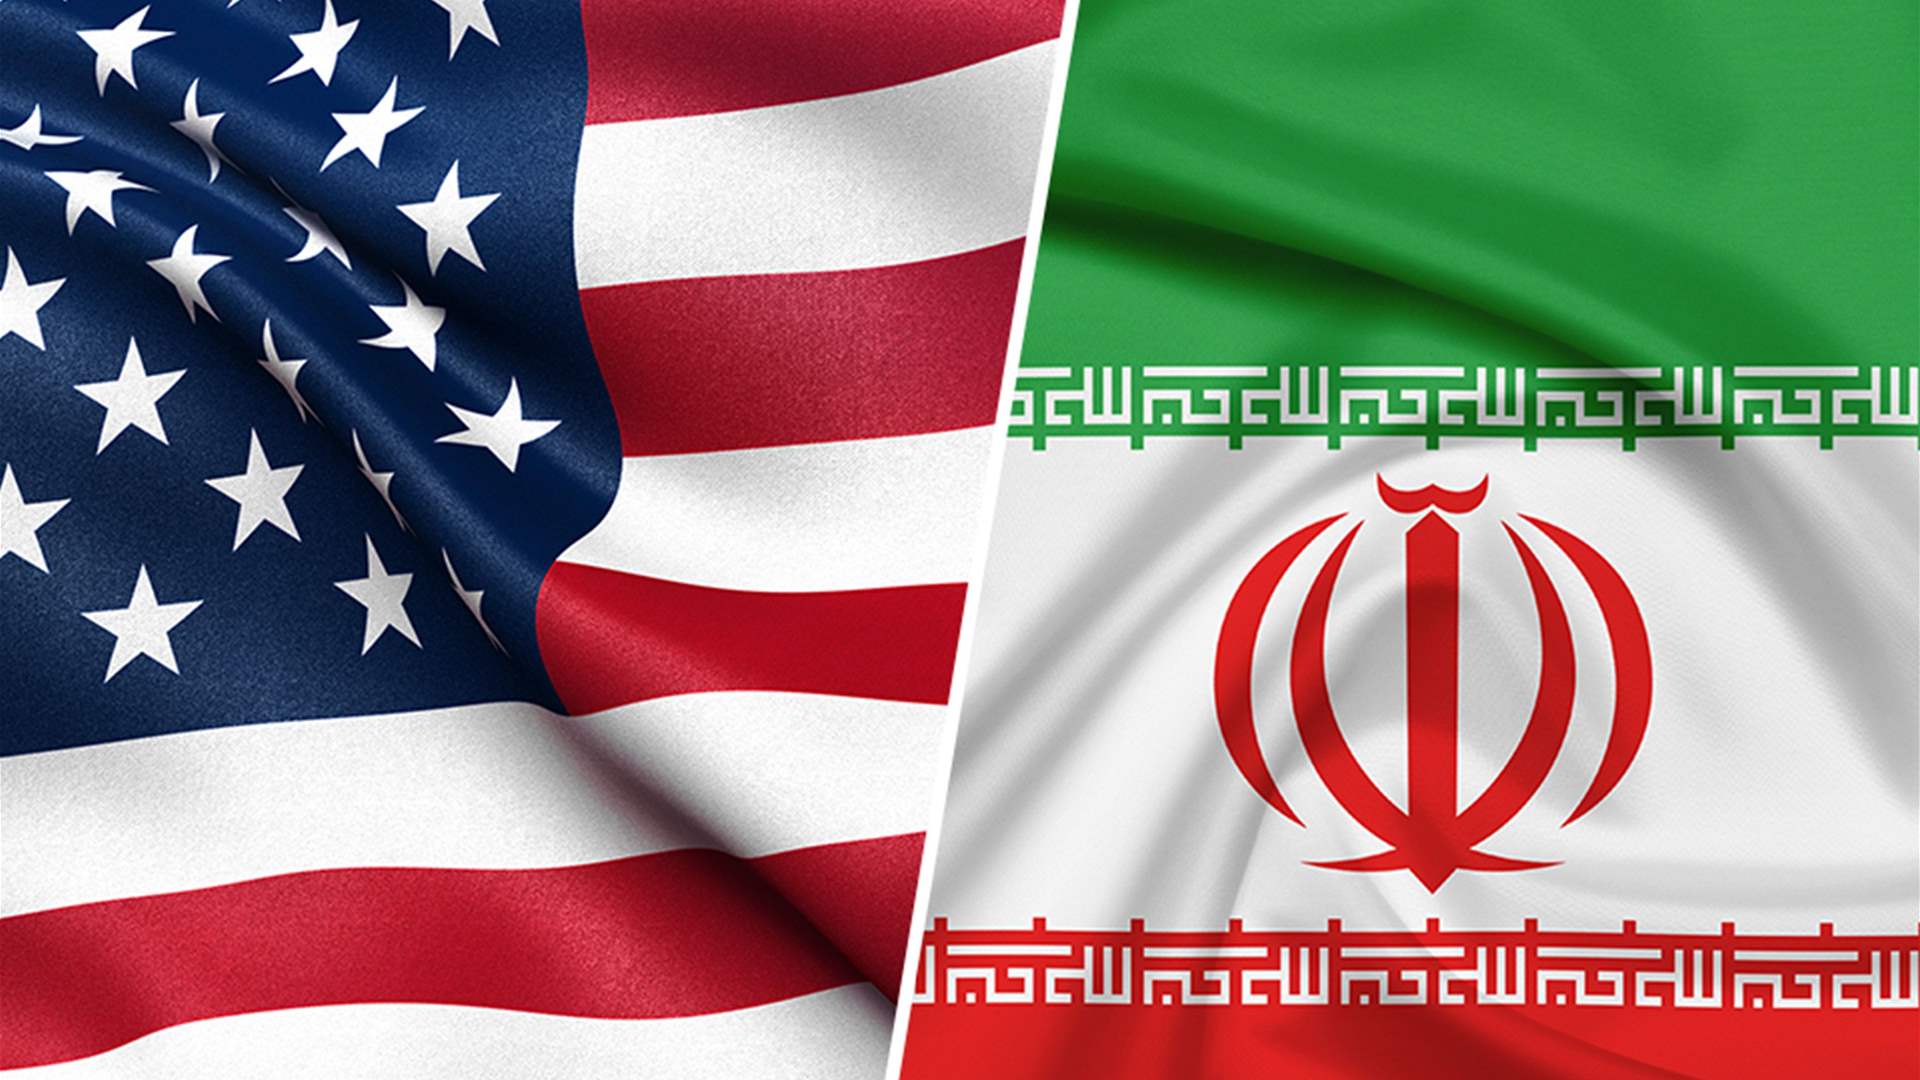 Washington faces ongoing threats from Iran-backed groups, despite airstrikes